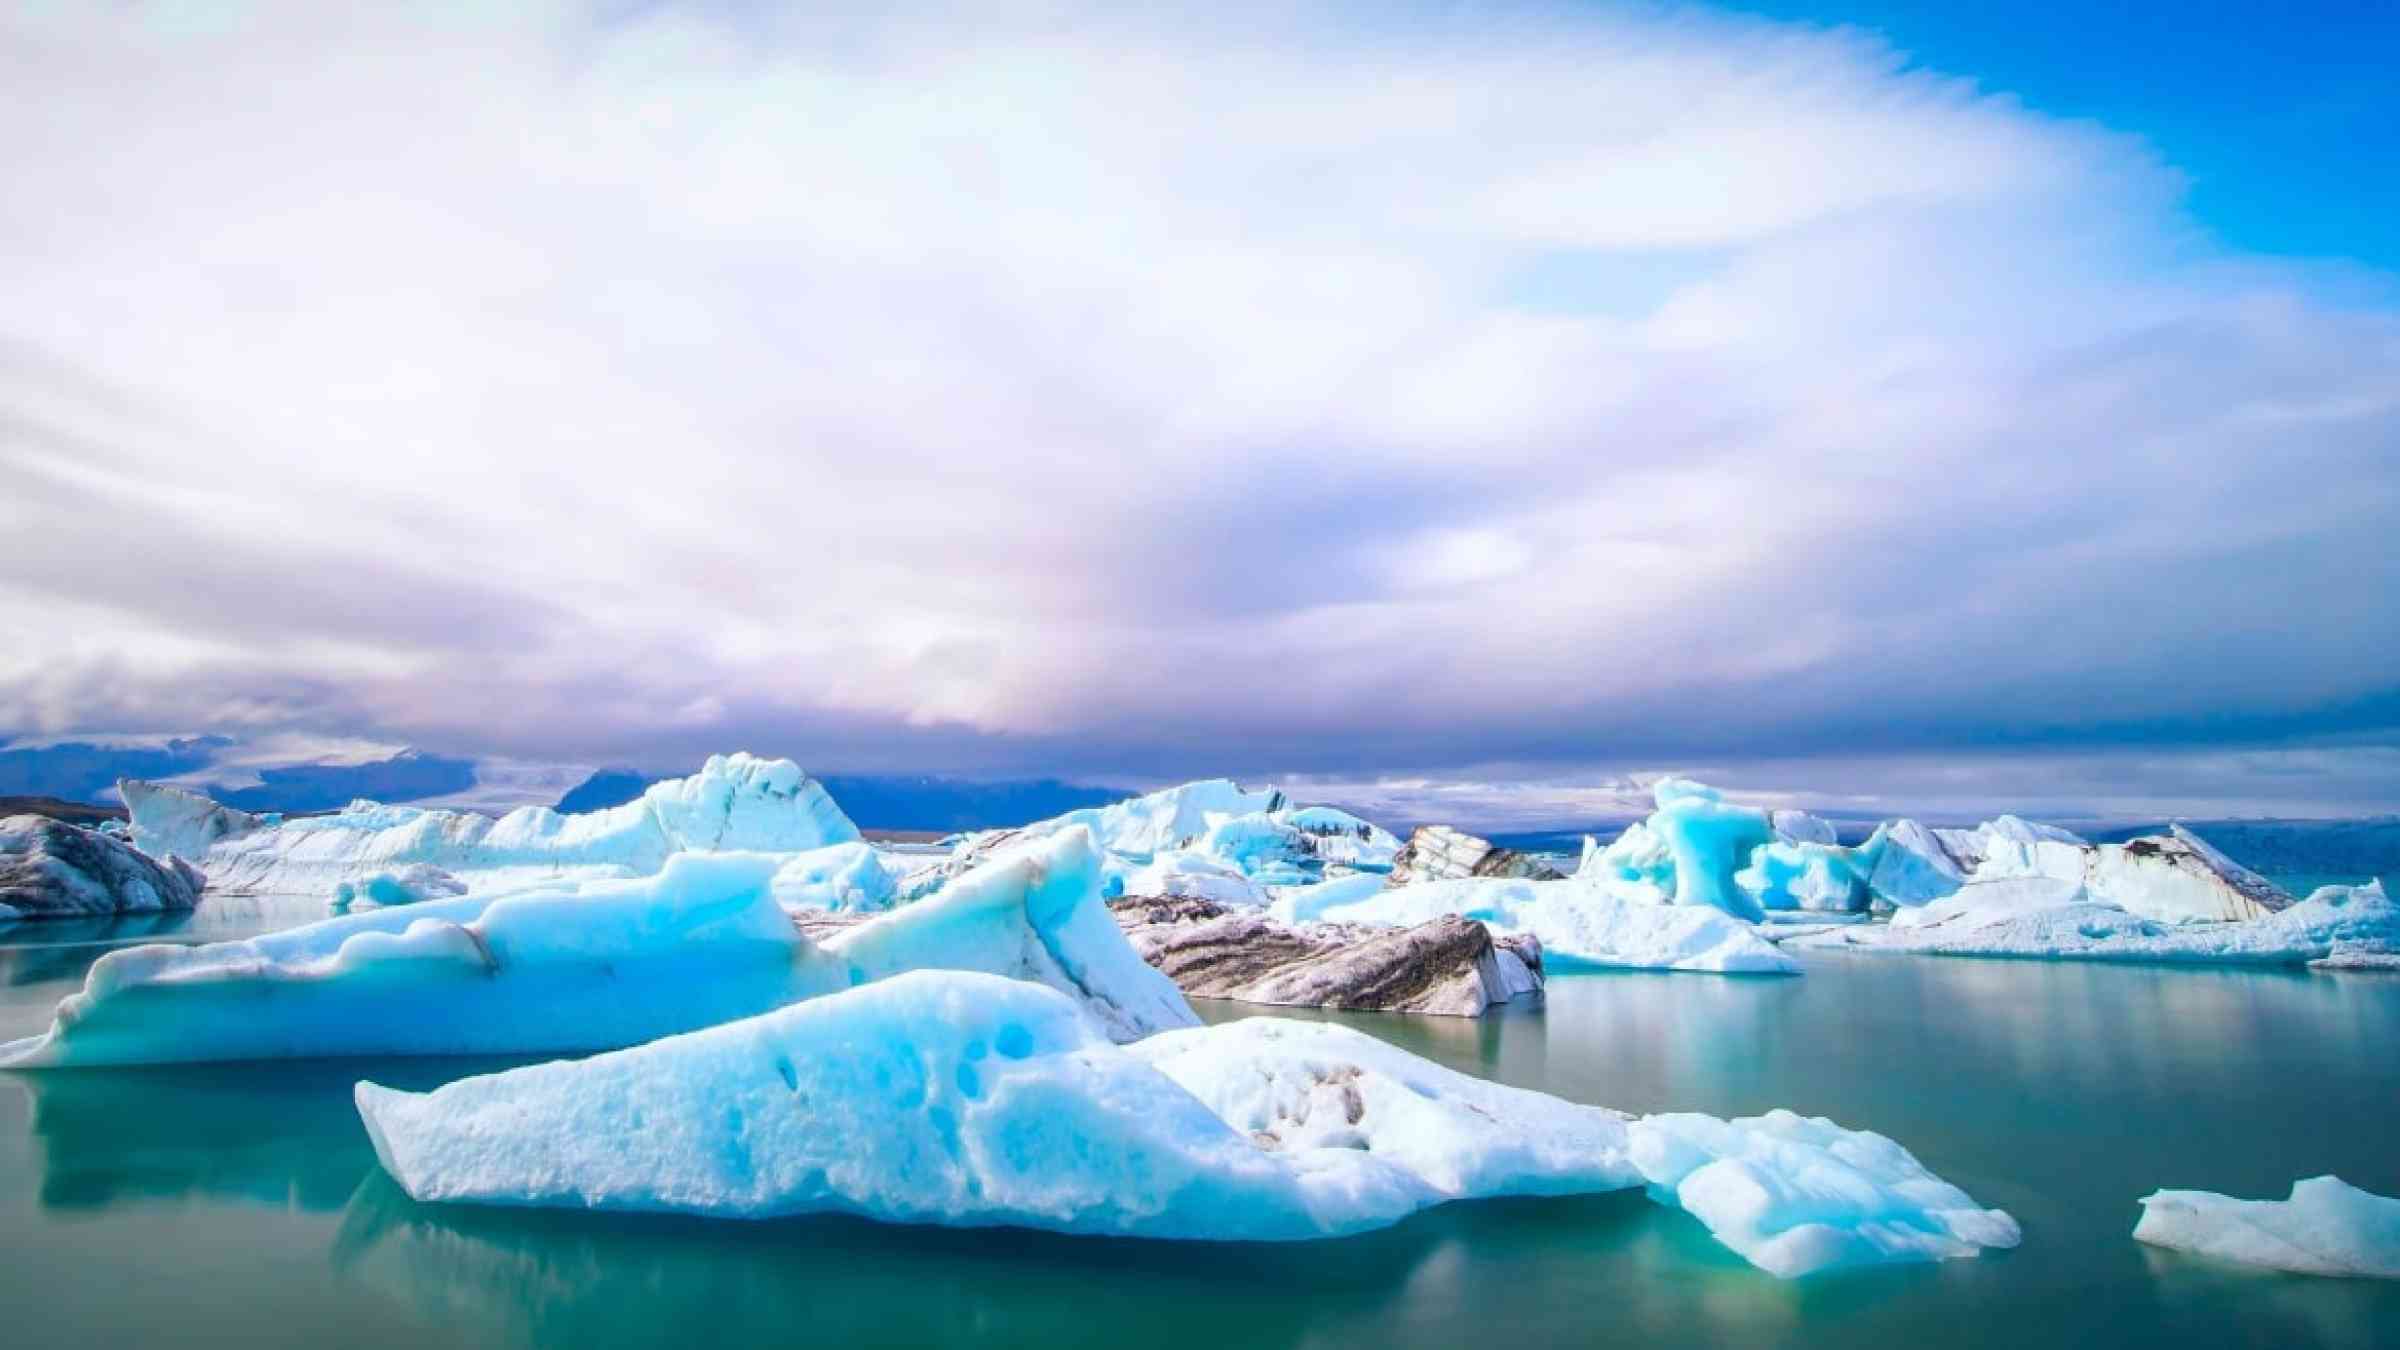 Arctic sea with ice